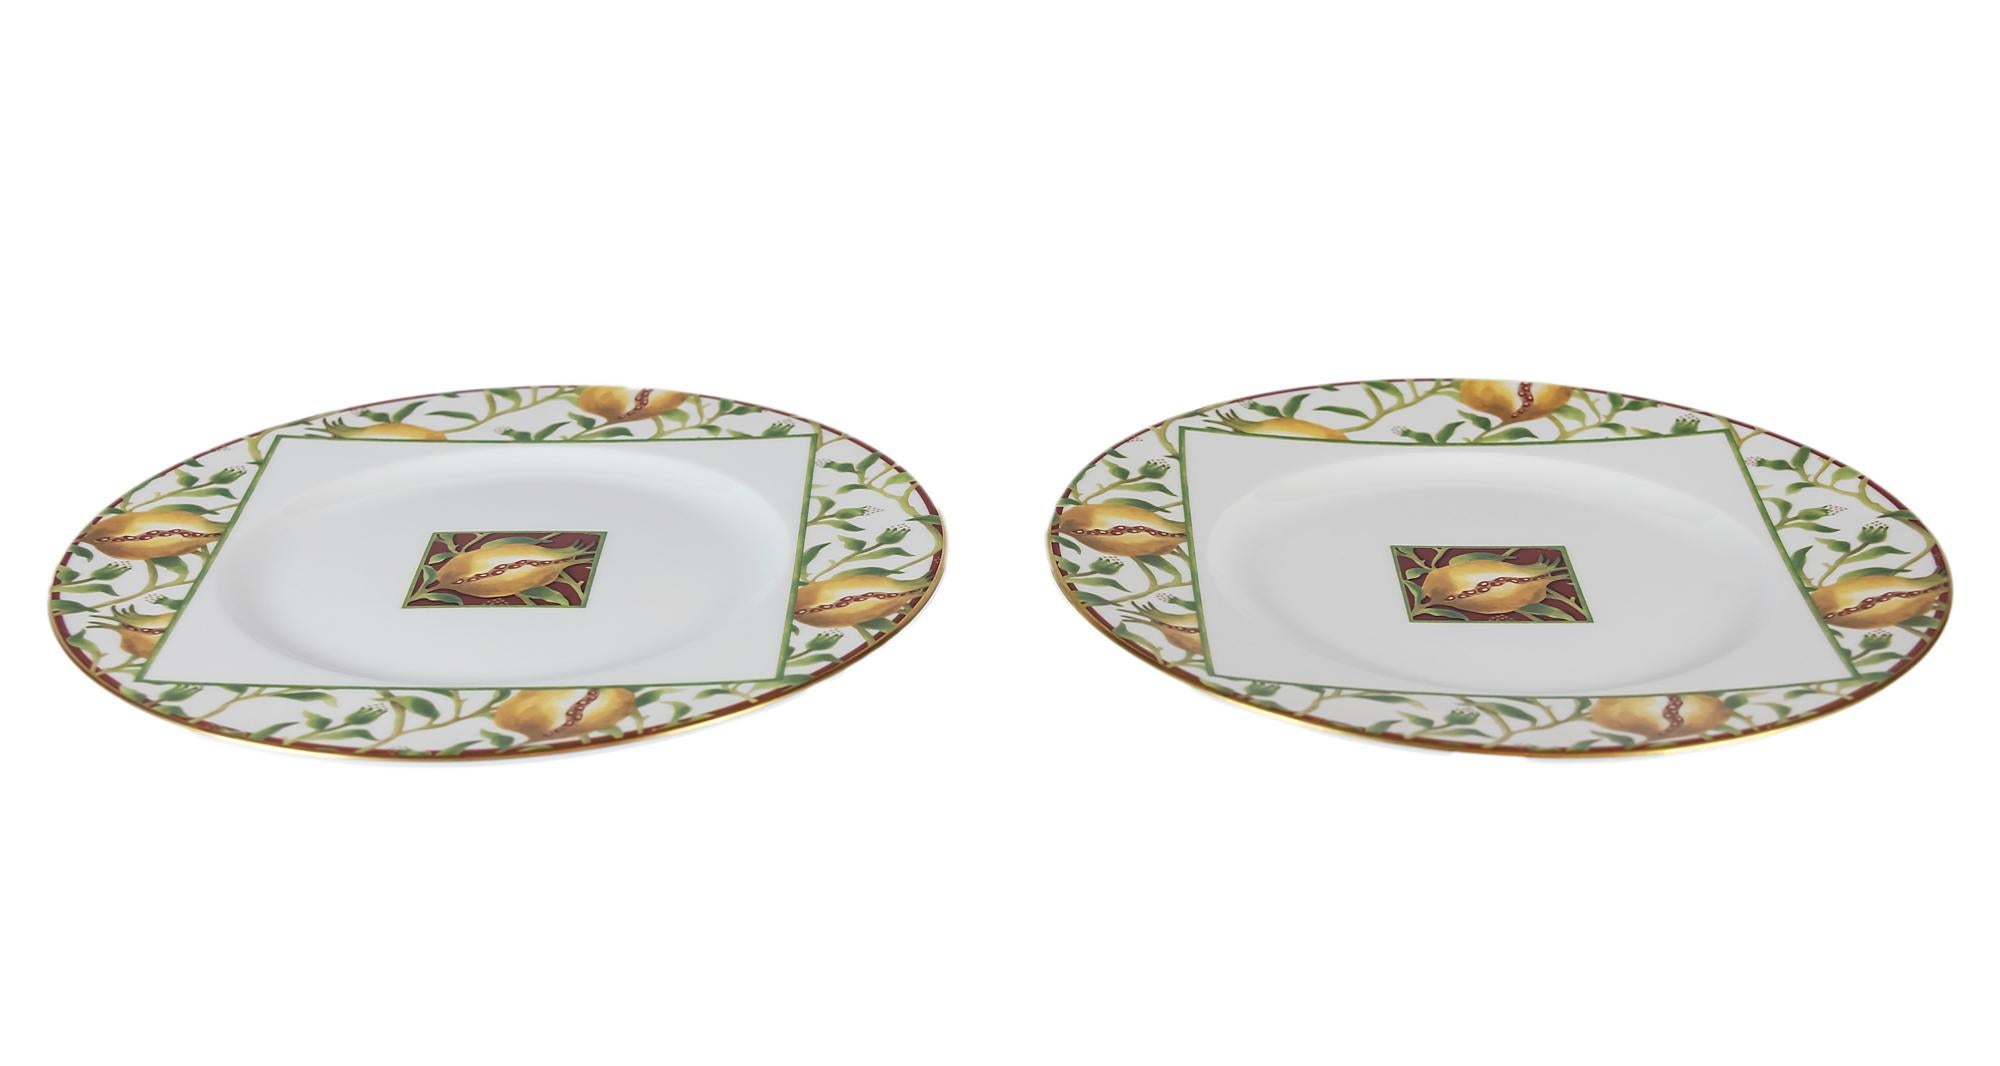 Pair of Italian Richard Ginori porcelain plates with pomegranate decor and gilded edge.
  